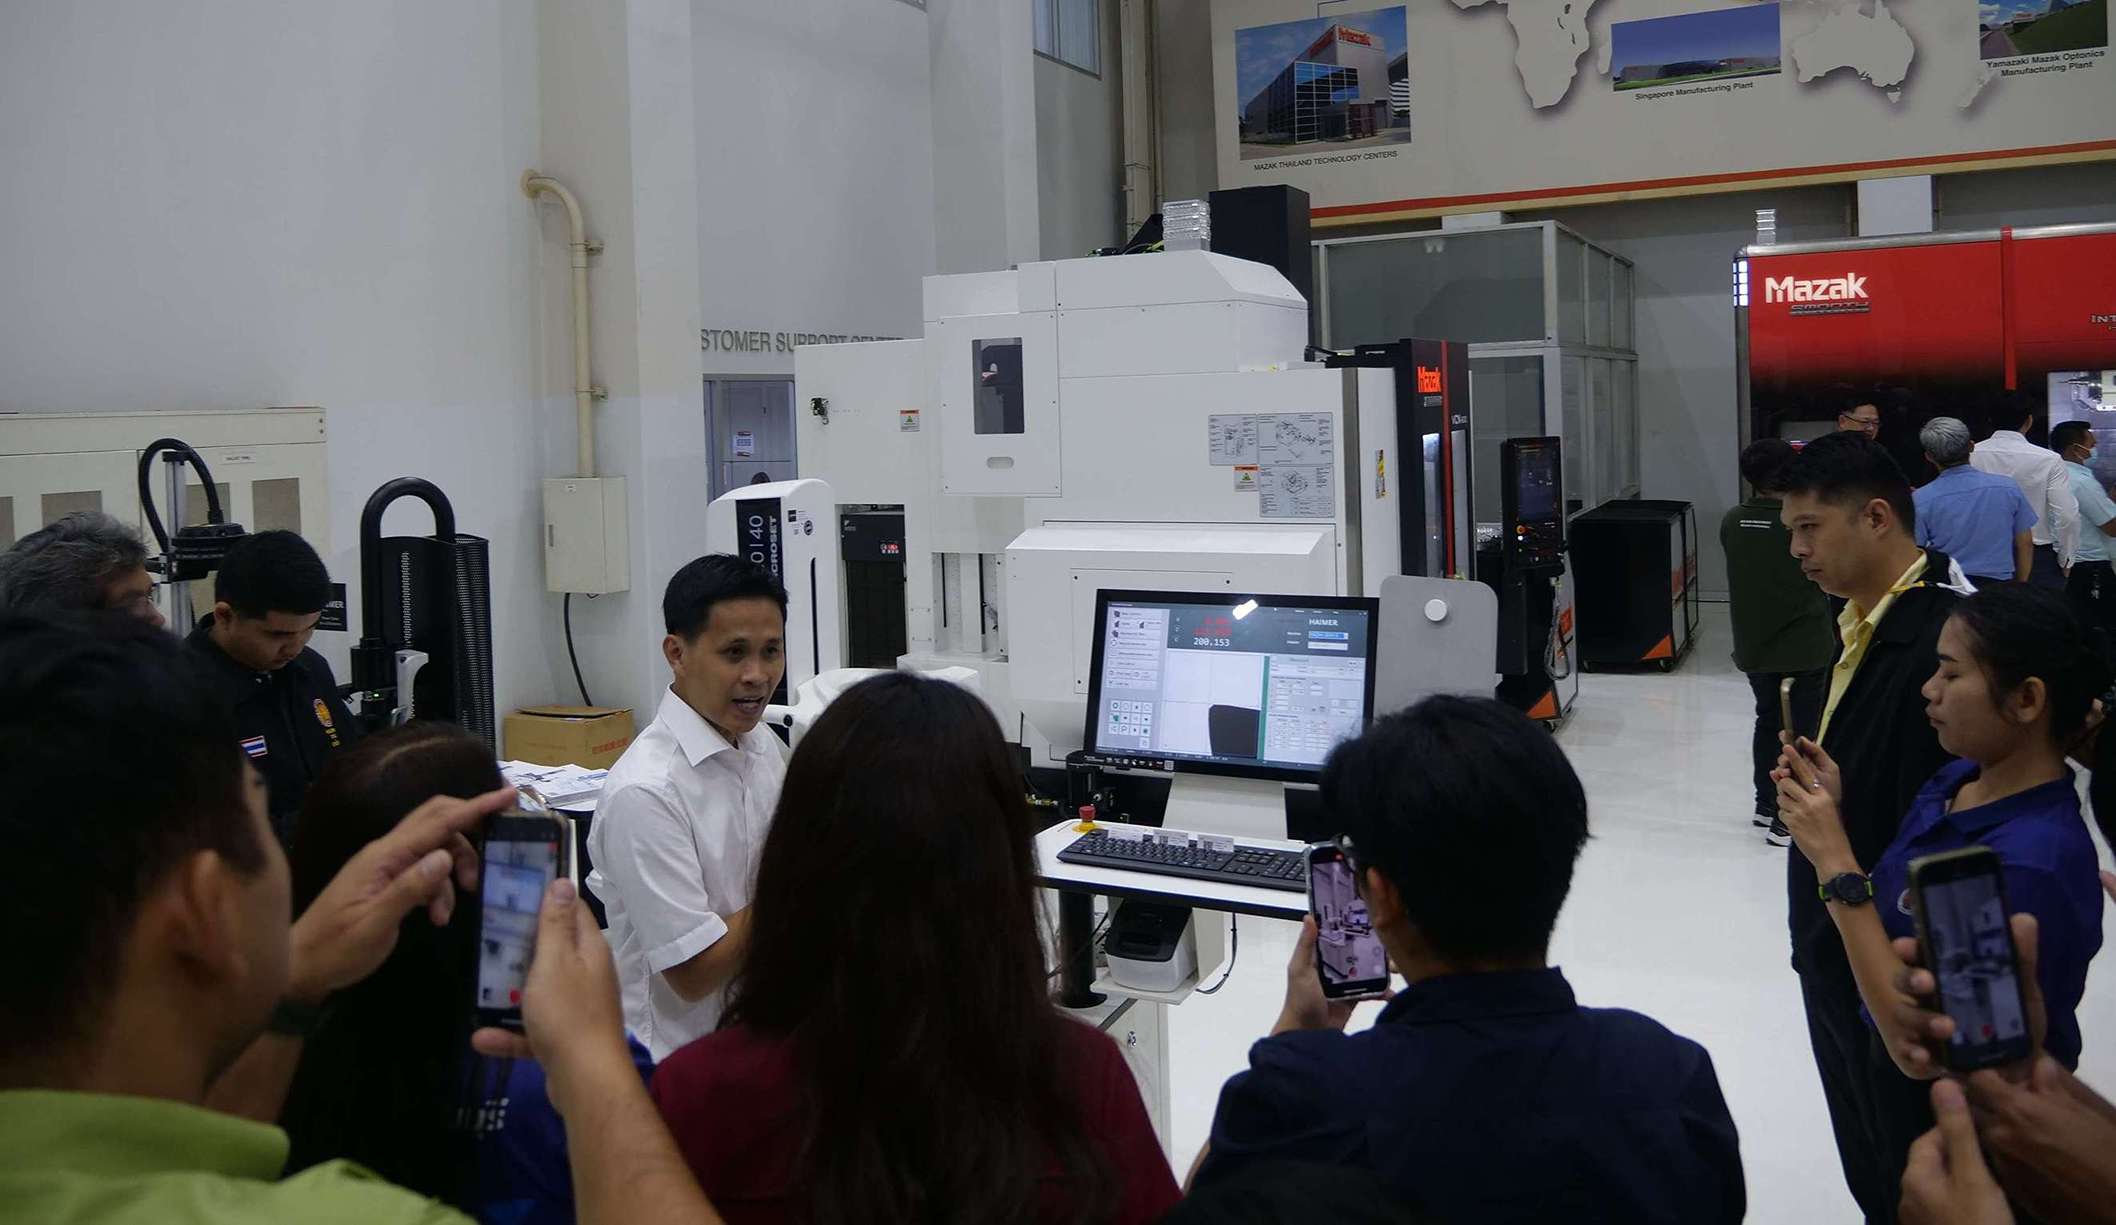 Training ฝึกอบรมโครงการฝึกอบรมหลักสูตรการพัฒนาสมรรถนะครูด้านเทคโนโลยีการผลิตในอุตสาหกรรม 4.0, สำนักงานคณะกรรมการการอาชีวศึกษา (สอศ.) และ บริษัท มินเซนแมชีนเนอรี่ จำกัด, Mazak Thailand Technology Center